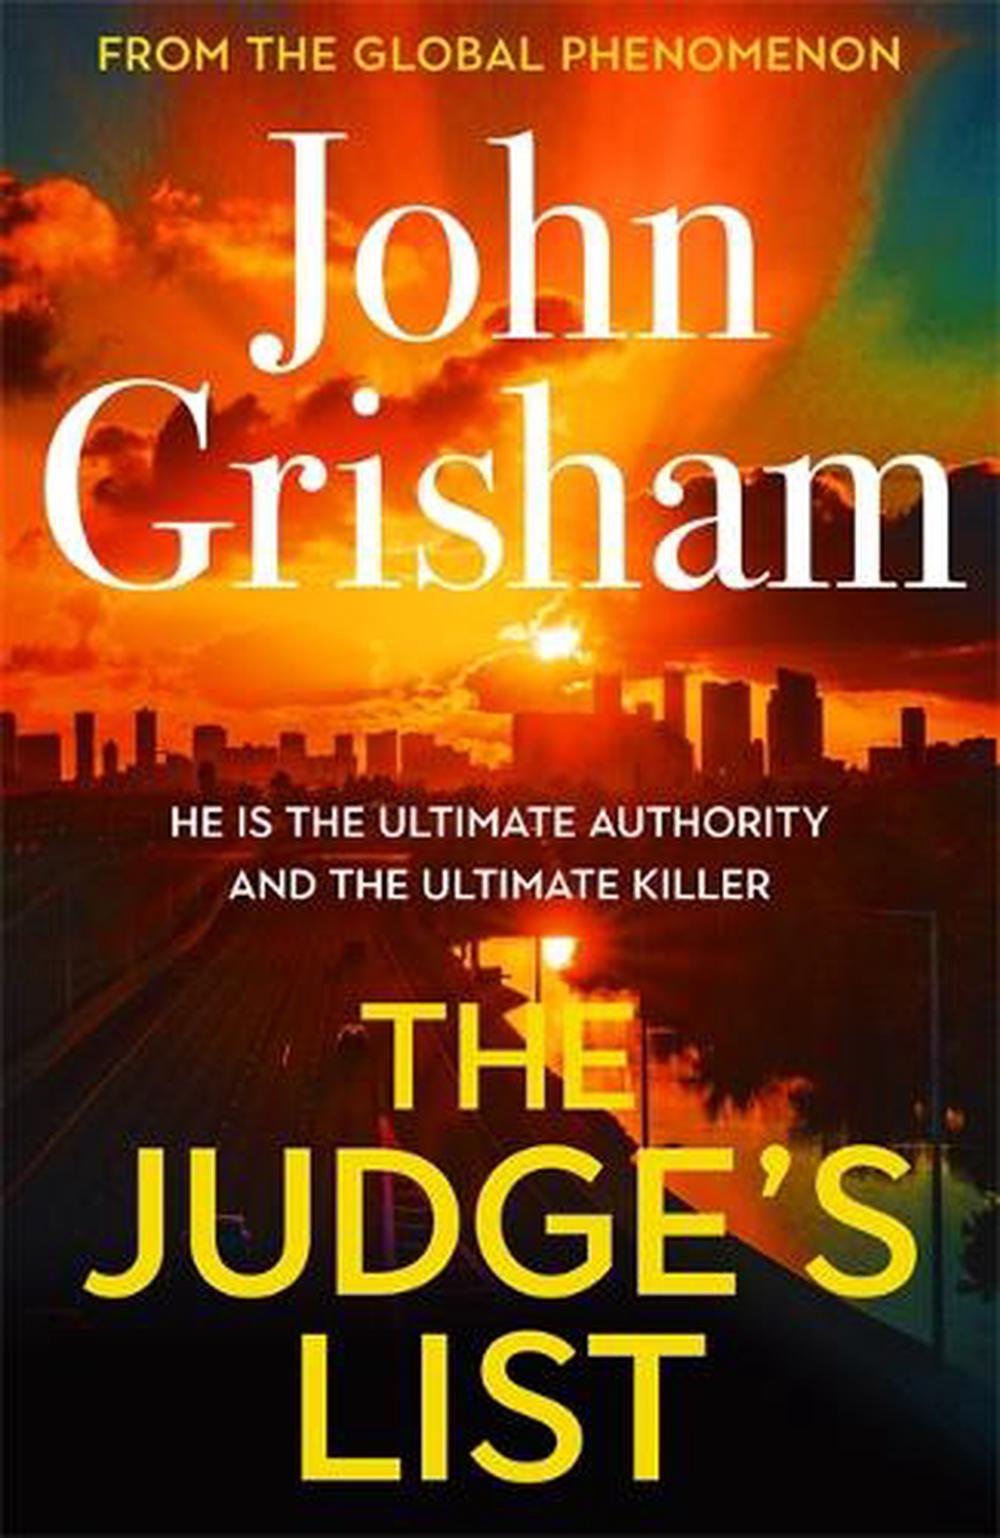 index witness to a trial grisham